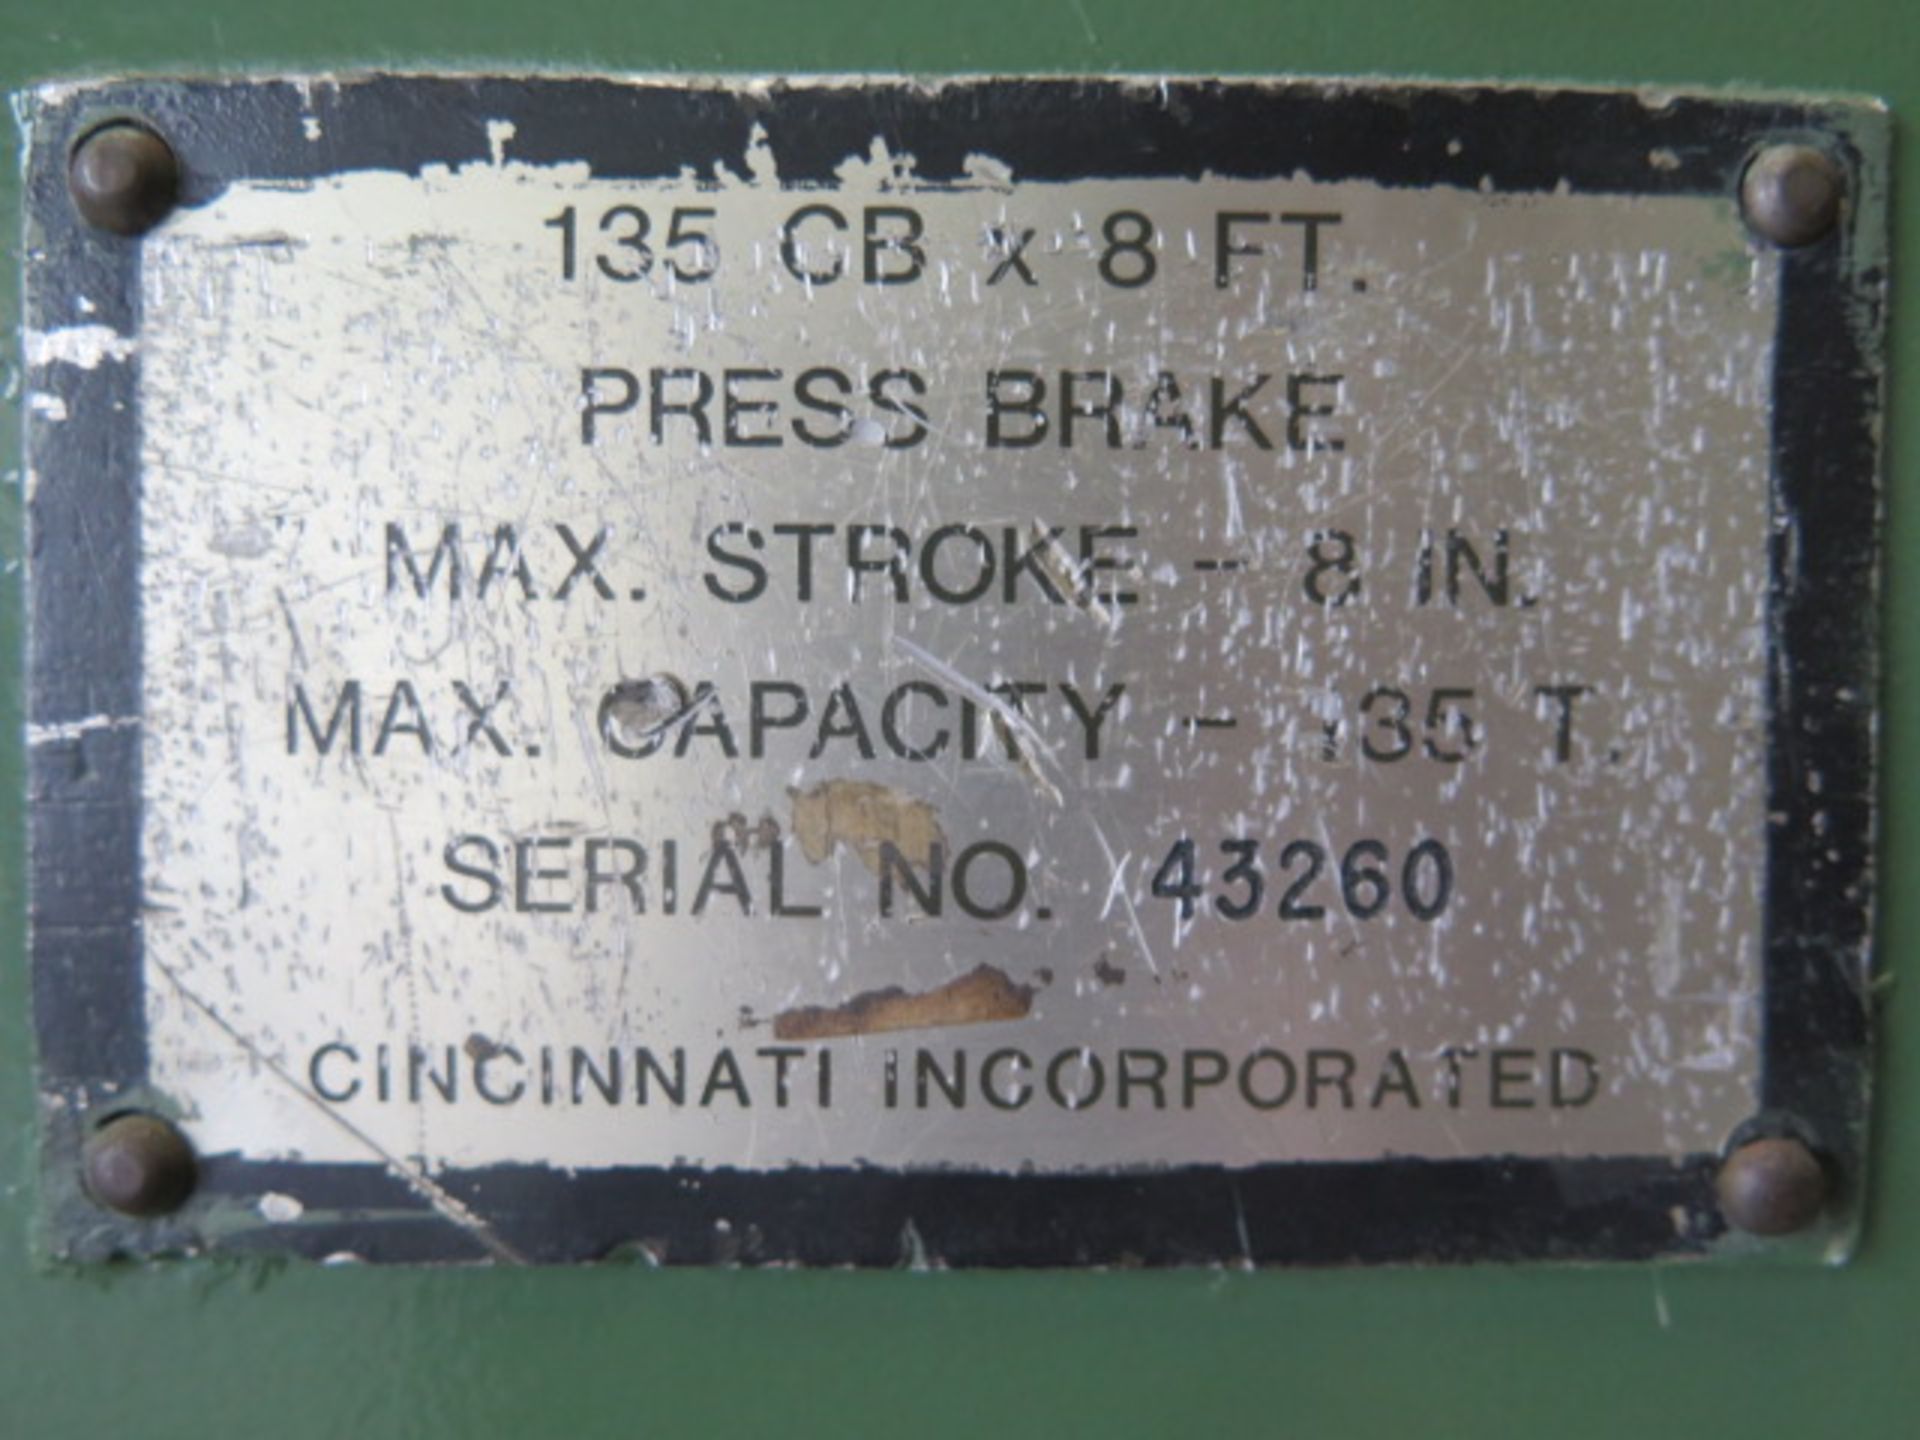 Cincinnati 135CBx8FT 135 Ton x 10’ CNC Hyd Press Brake s/n 43260 w/Dynabend III Controls, SOLD AS IS - Image 18 of 18